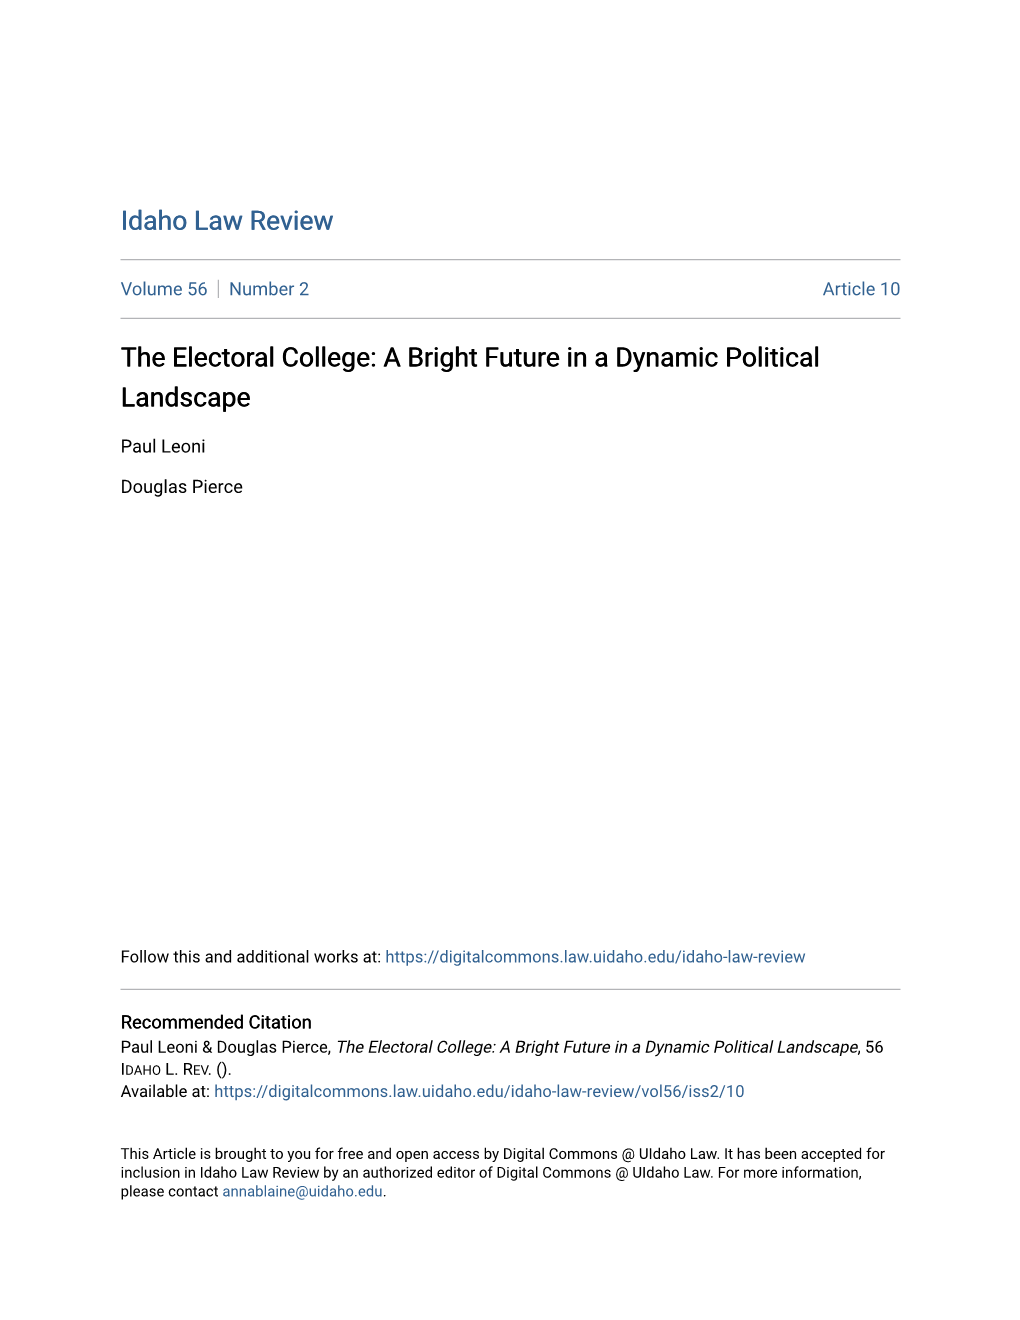 The Electoral College: a Bright Future in a Dynamic Political Landscape